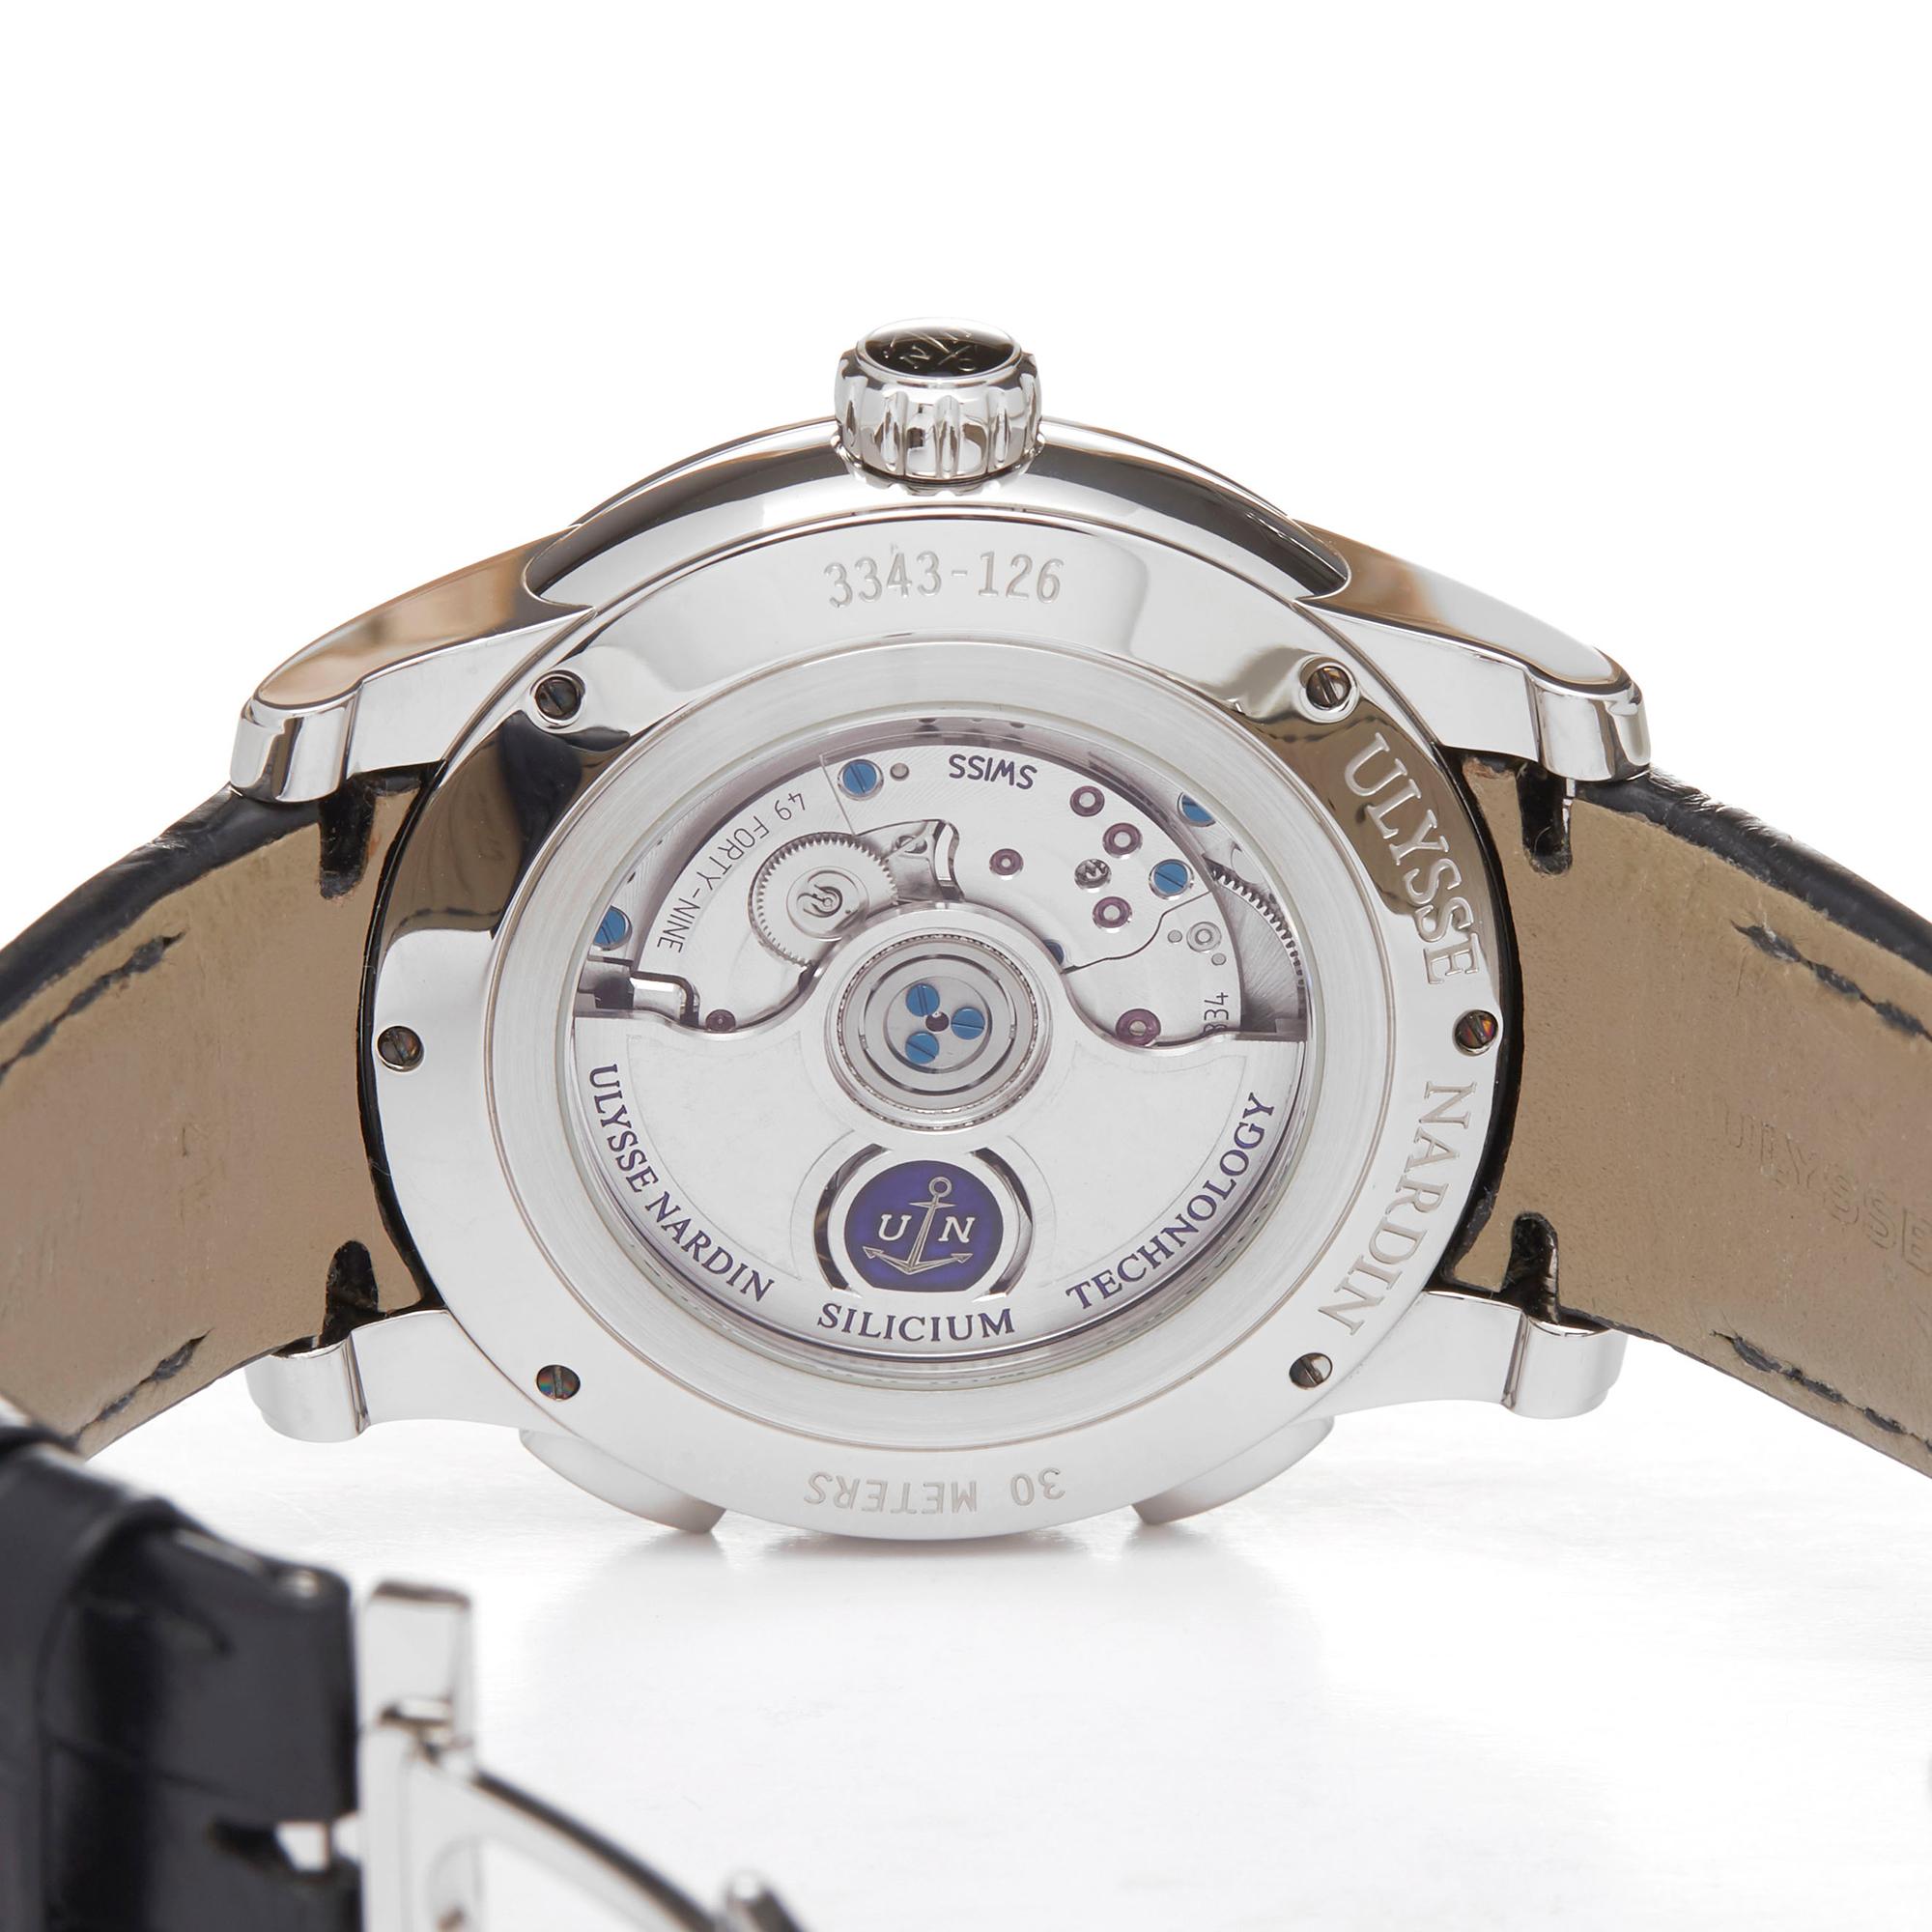 Ulysse Nardin Dual Time Stainless Steel 3343-126 Wristwatch 2